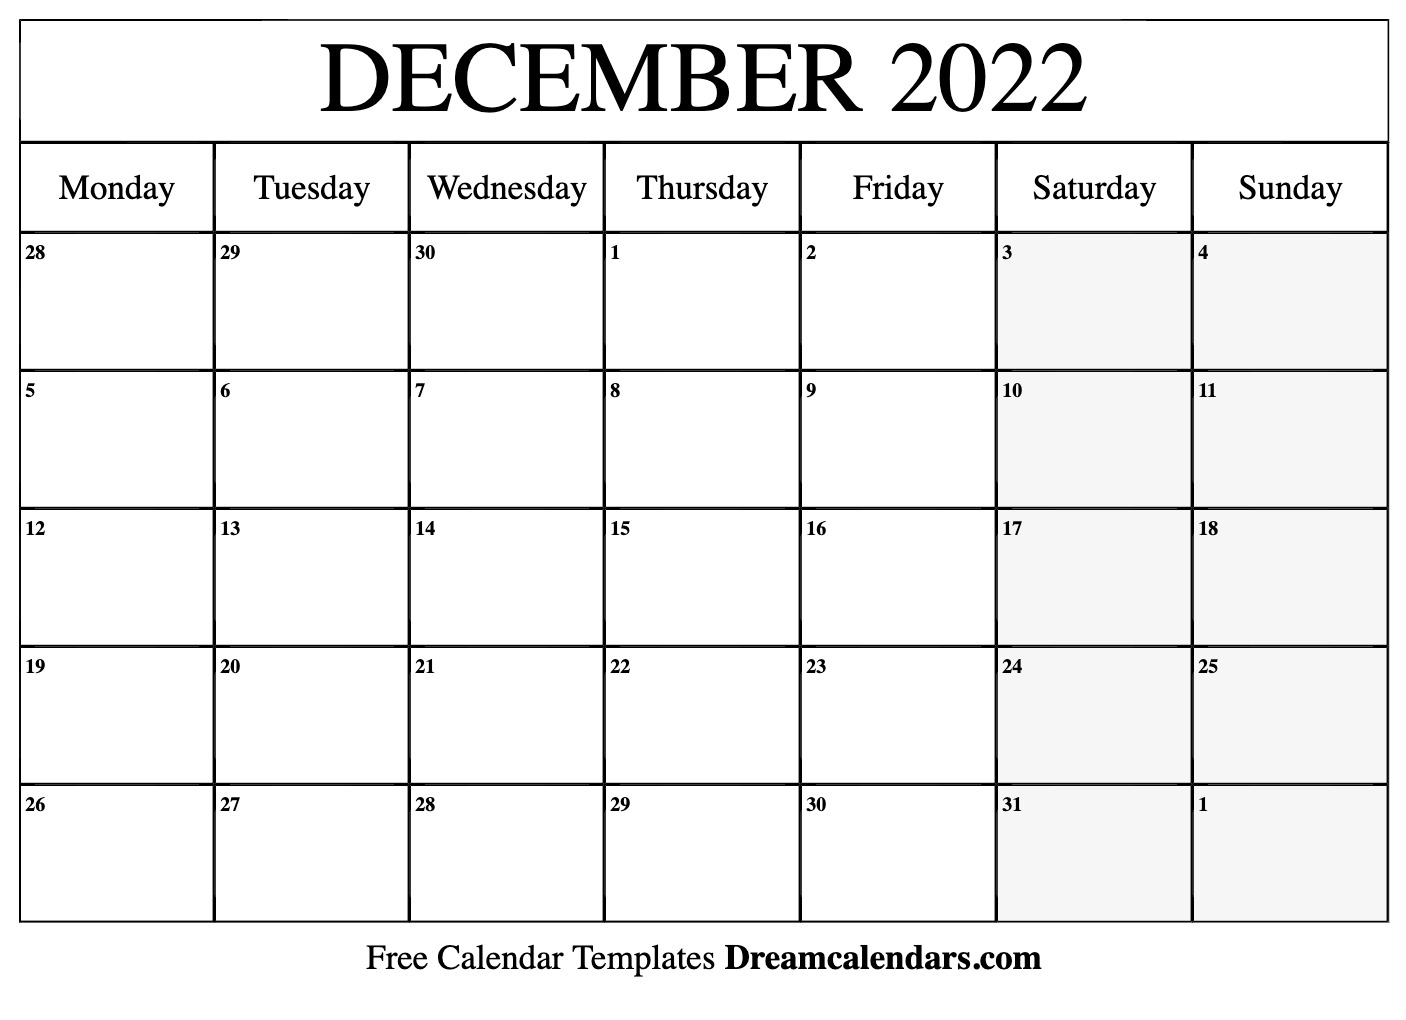 December 2022 Holiday Calendar Download Printable December 2022 Calendars